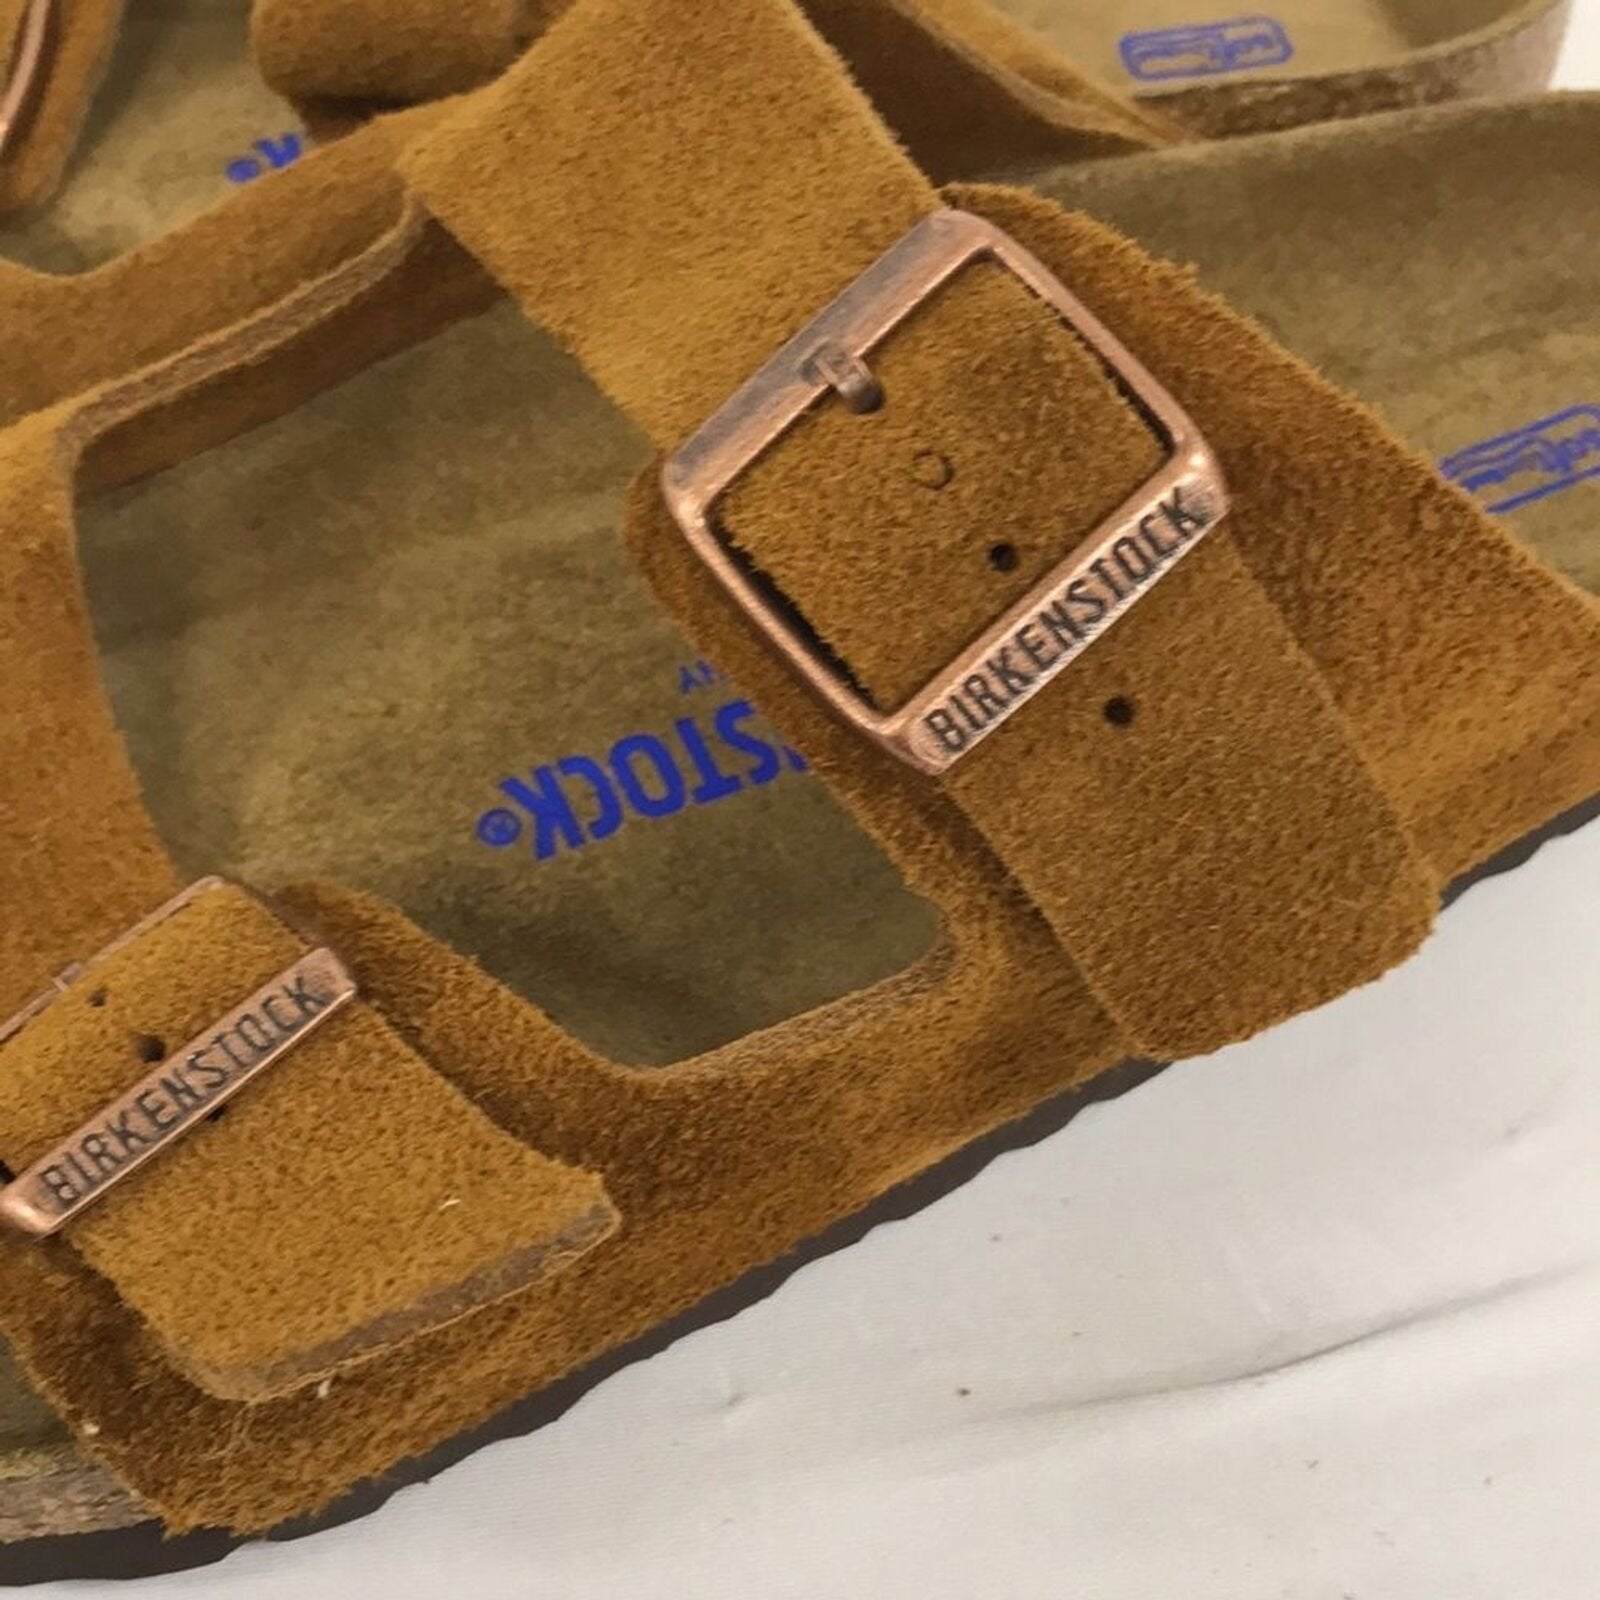 Birkenstock mens Arizona Shearling Sandals 10 US